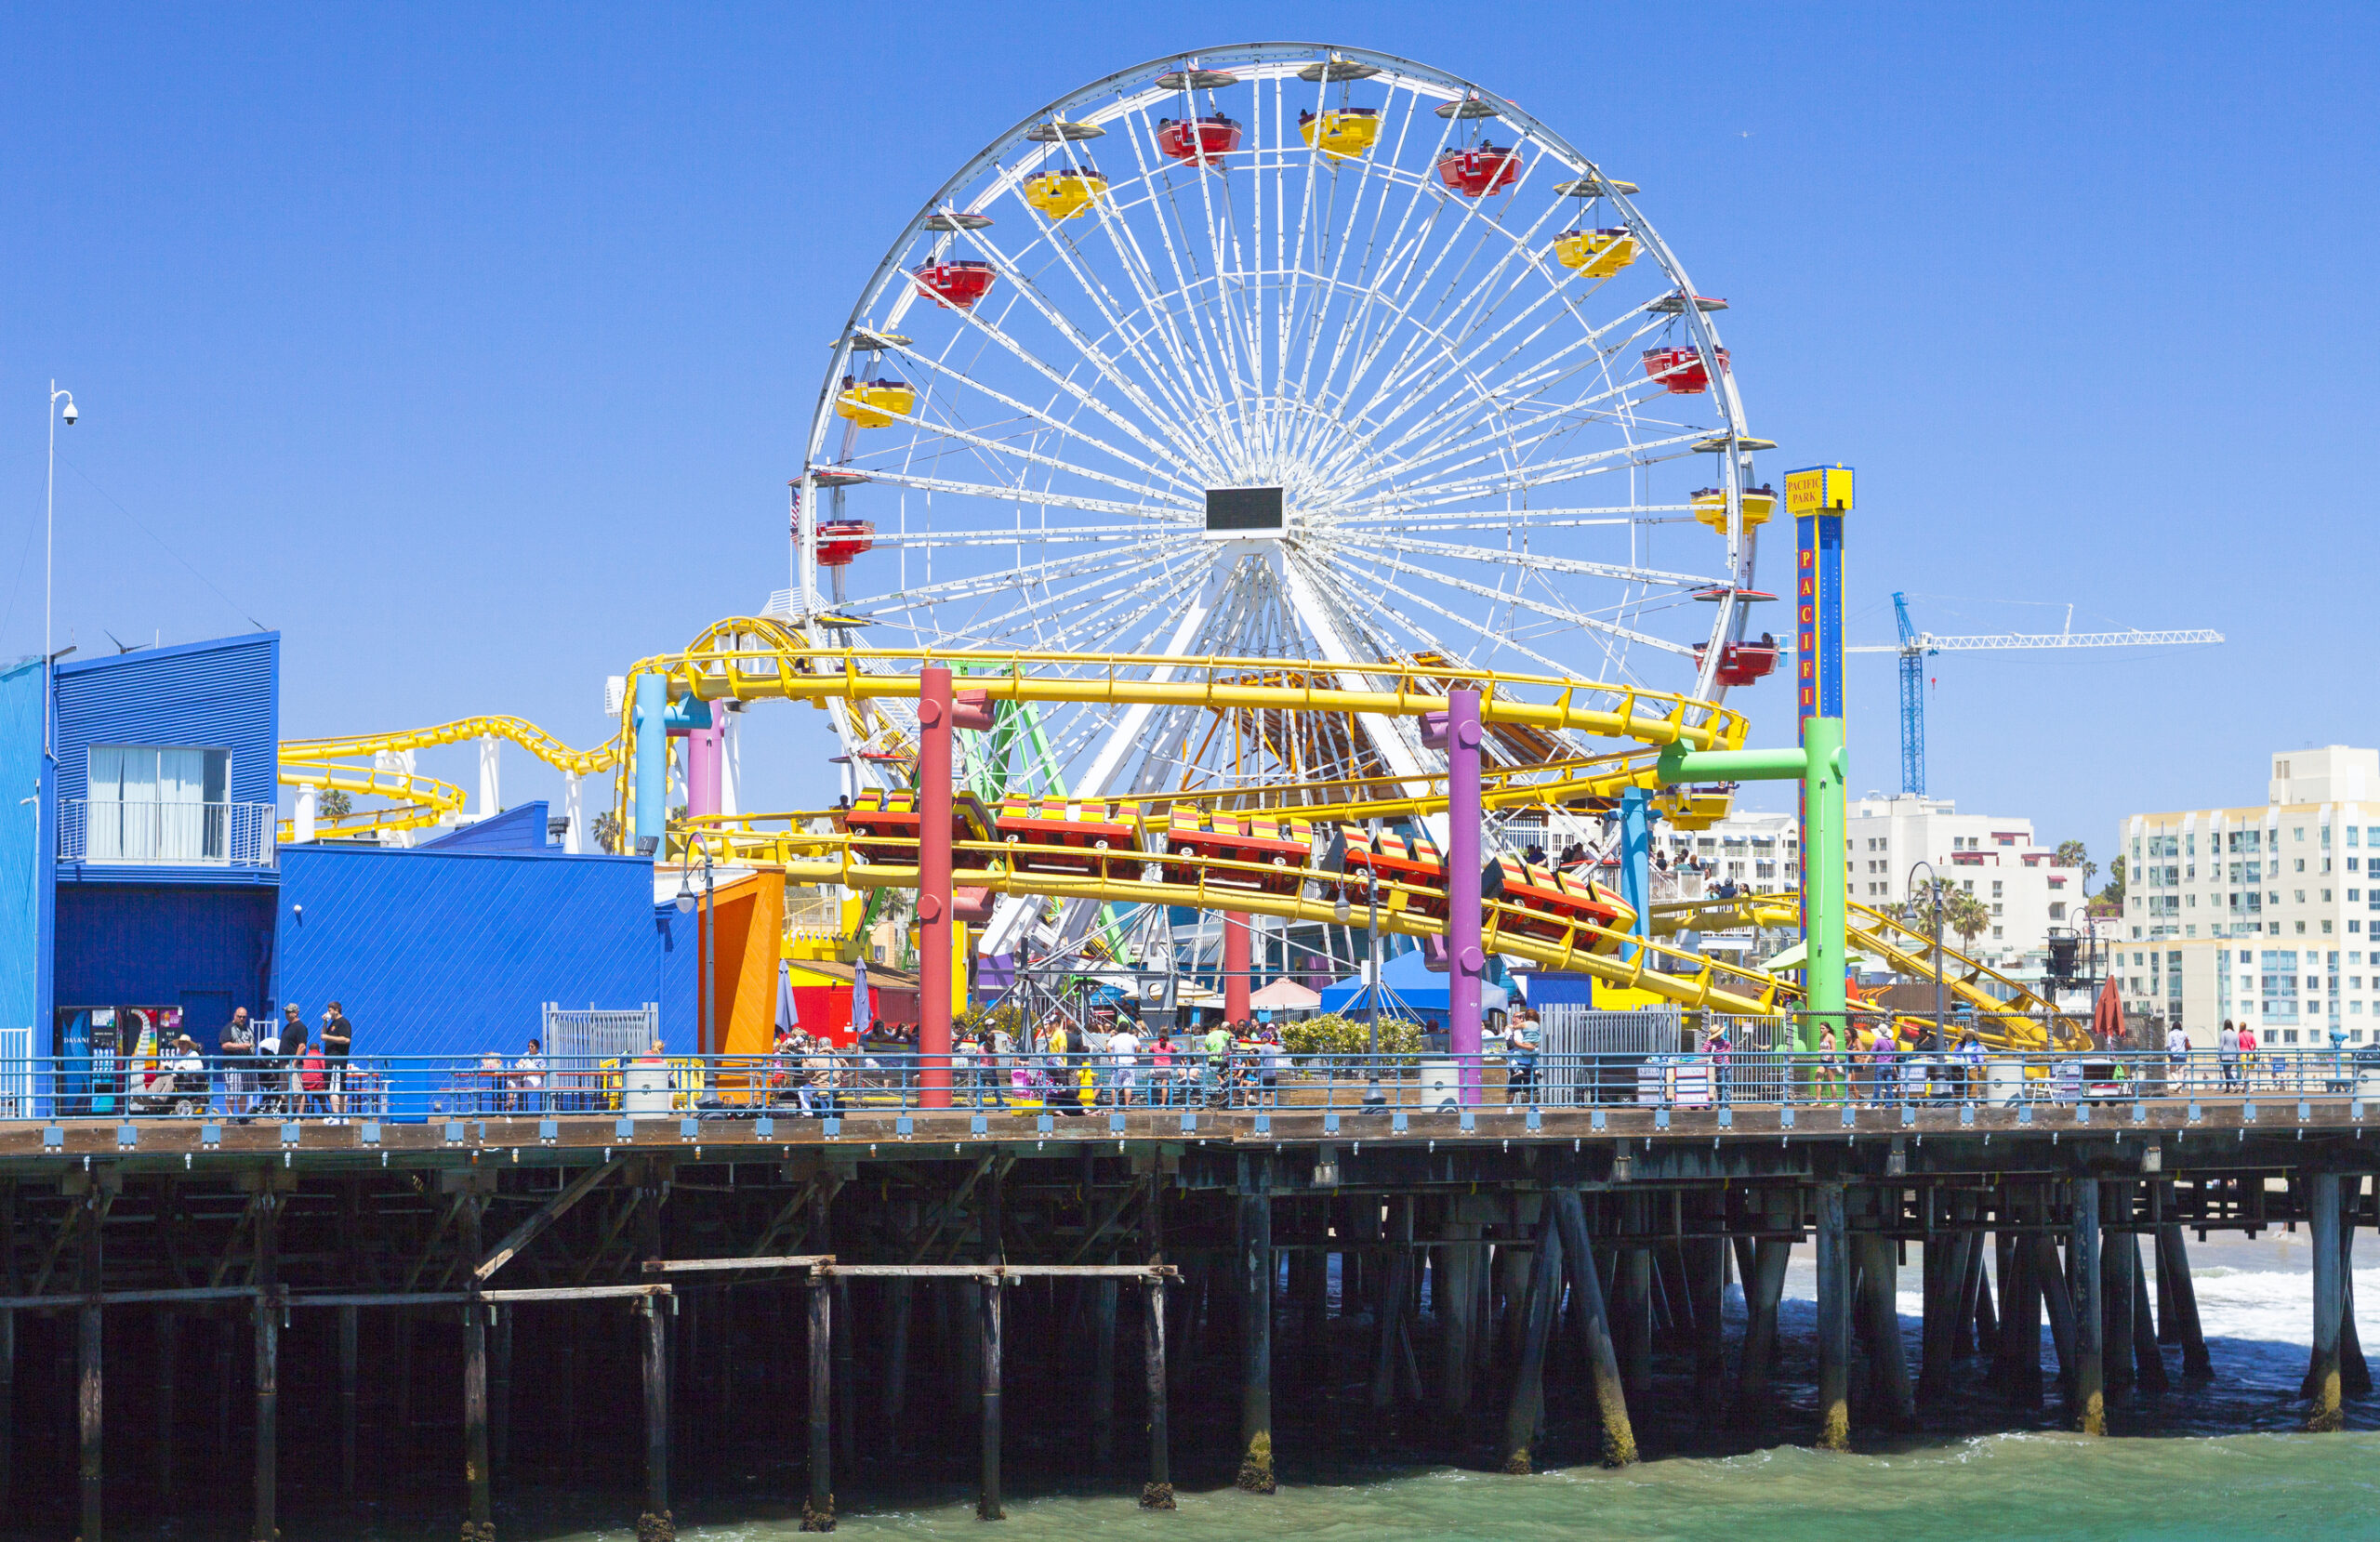 a Ferris wheel on the beach in ca